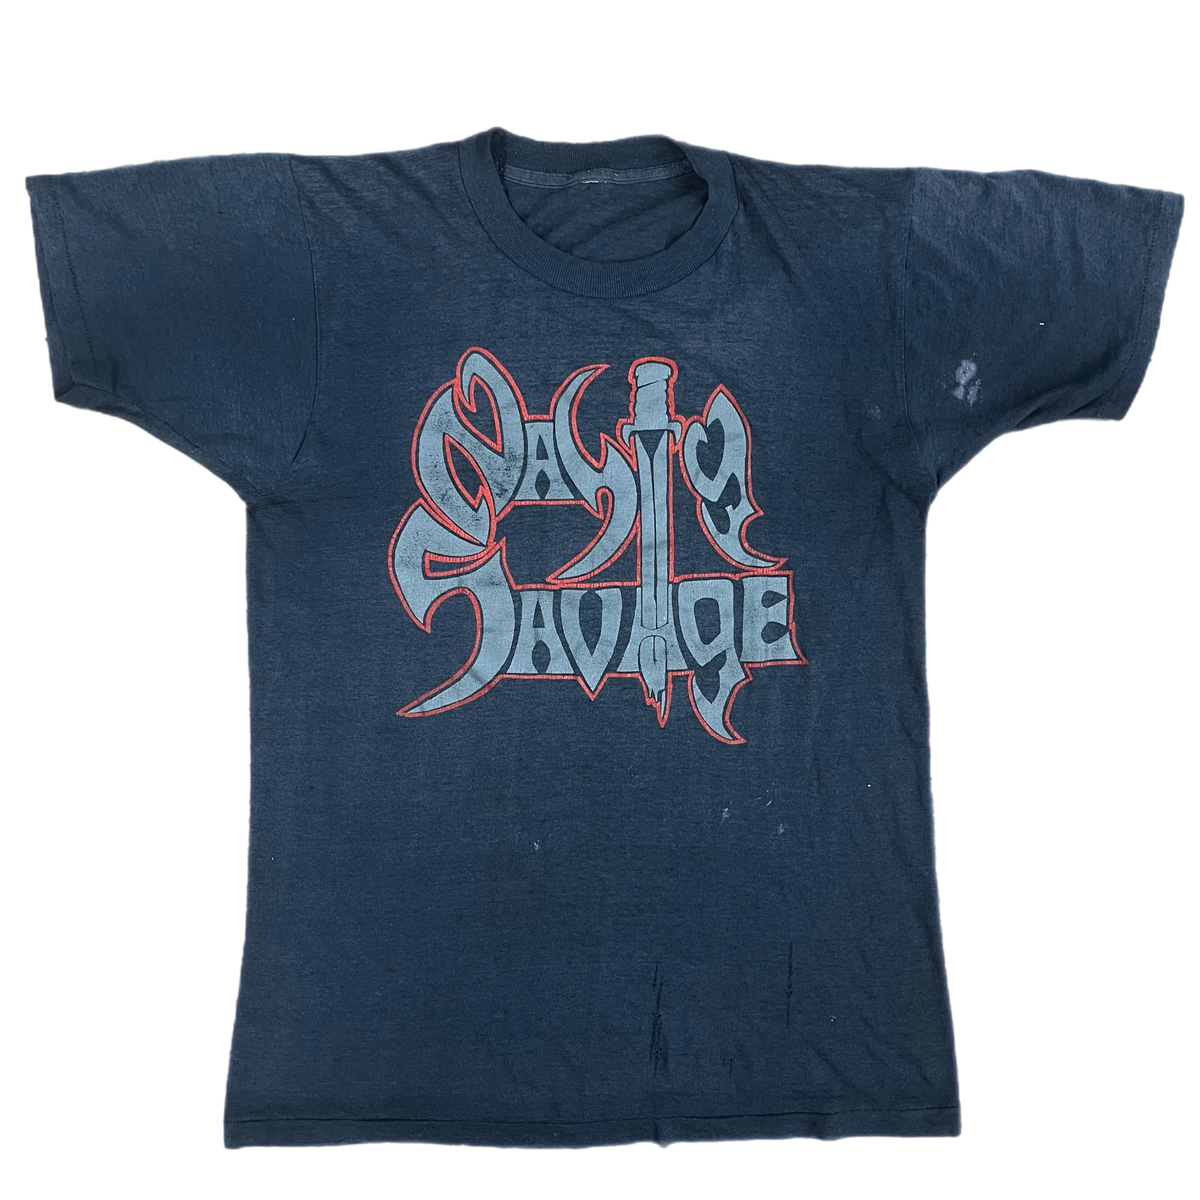 Vintage Nasty Savage &quot;Savage Wage Of Mayhem&quot; Tour T-Shirt